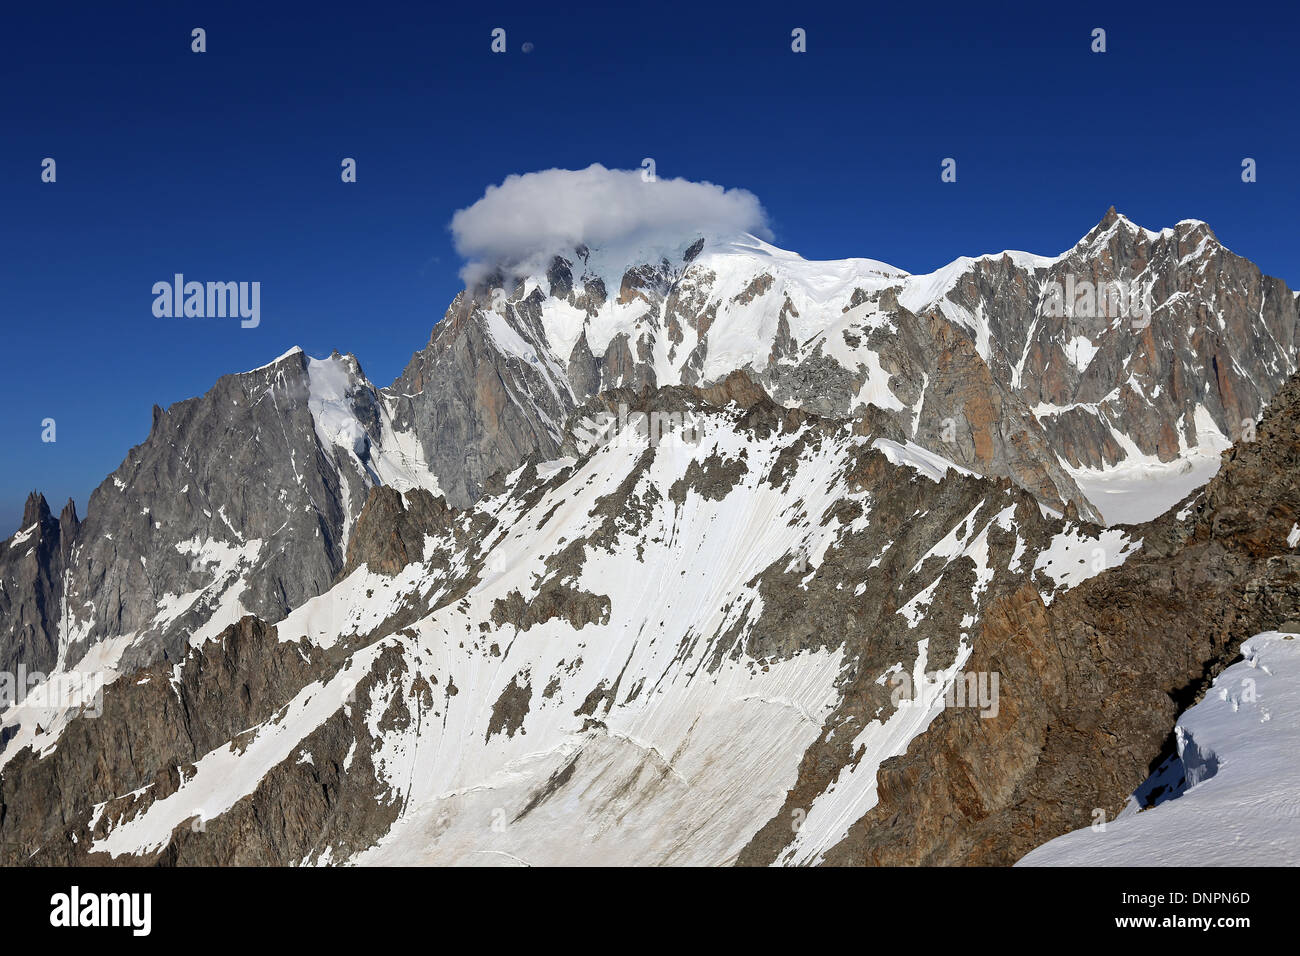 El Mont Blanc macizo montañoso, glaciares. Paisaje alpino. Valle d'Aosta. Alpes Italianos. Foto de stock